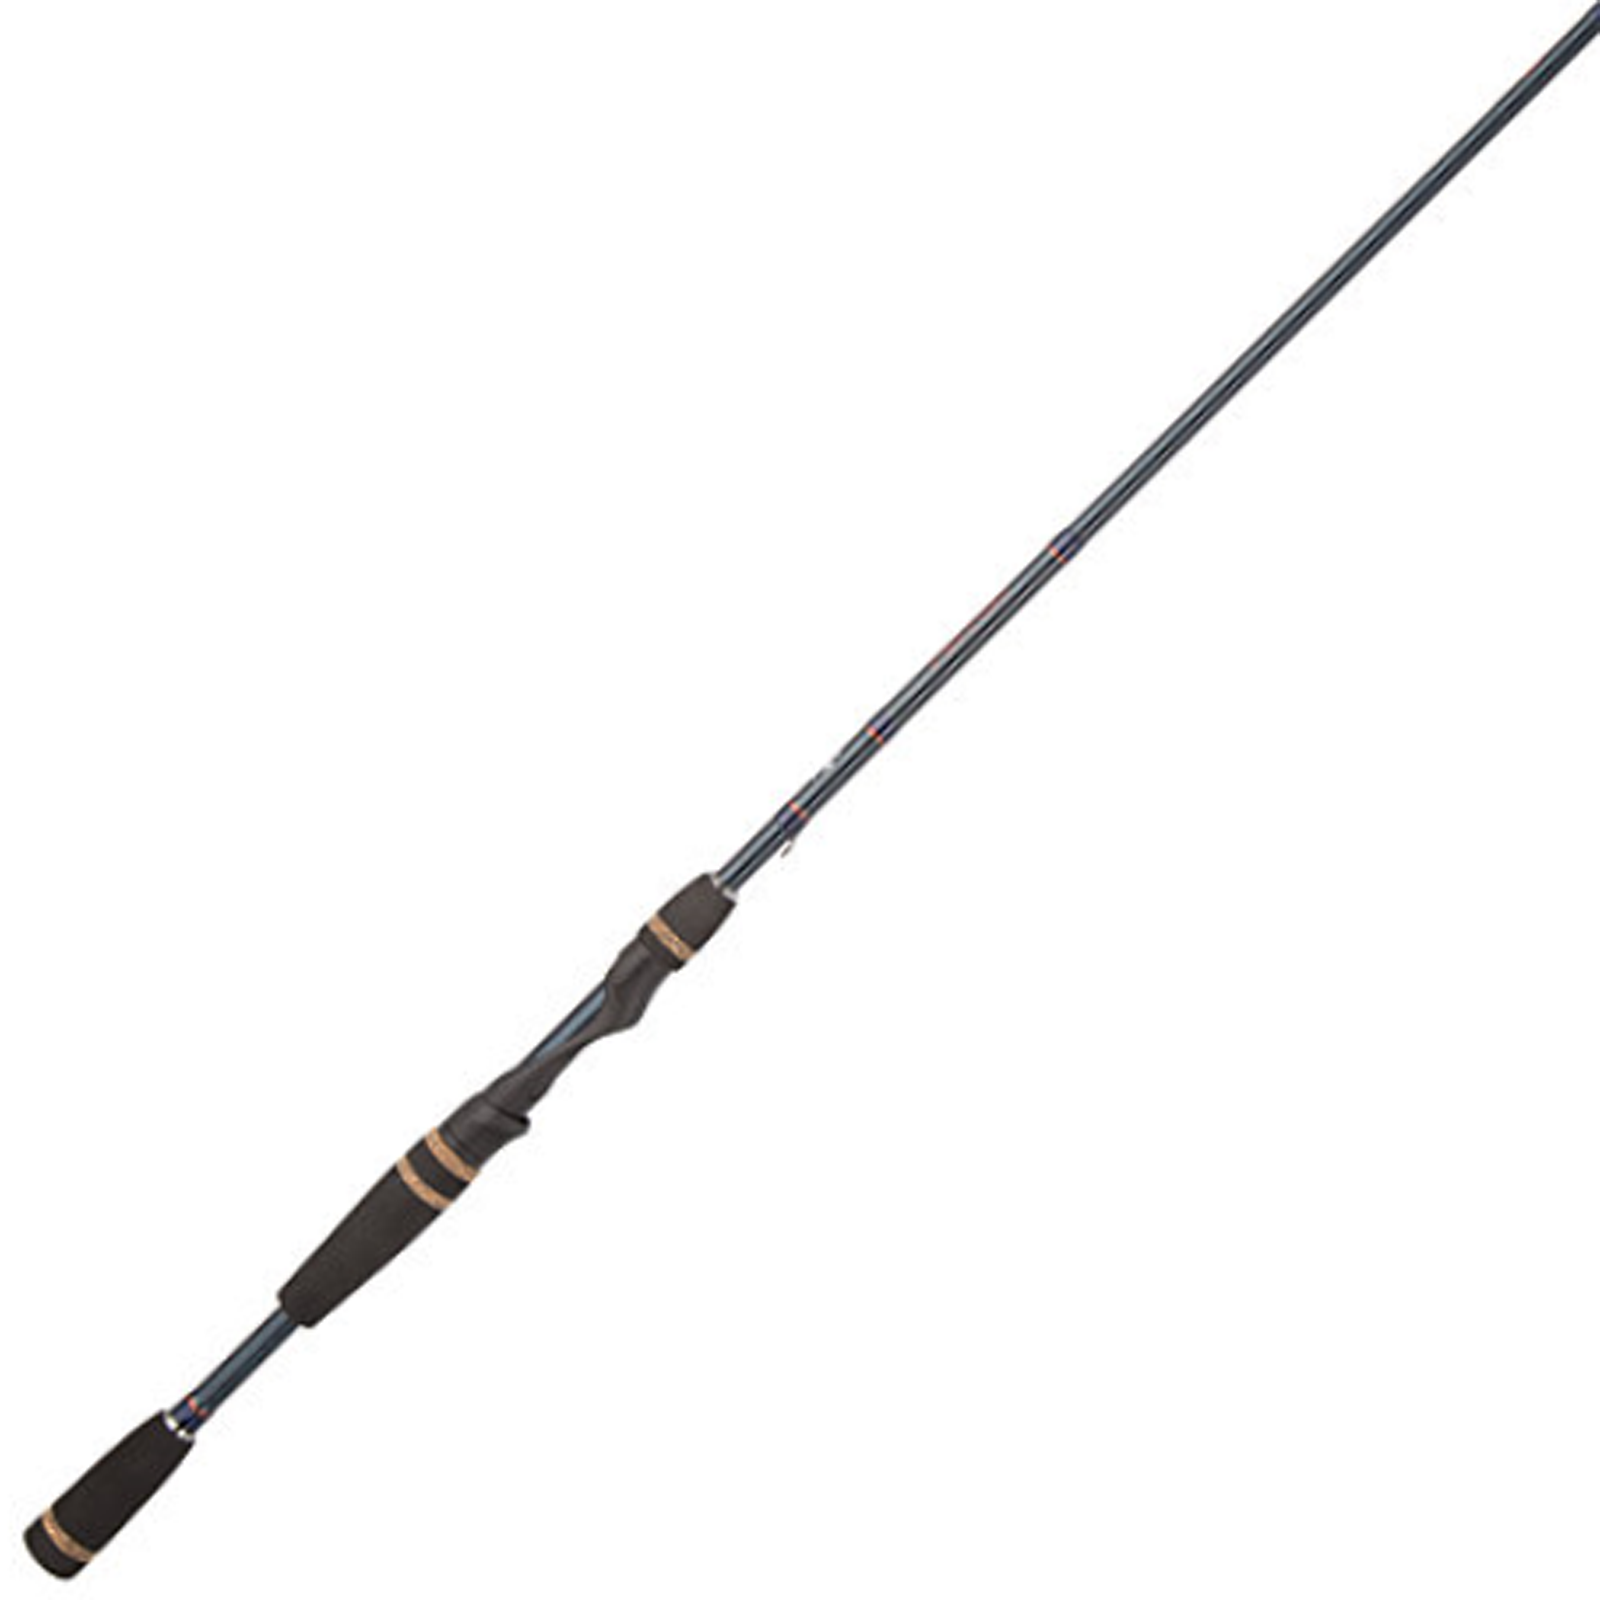 Hilltop Sports - Fenwick HMX fishing rods in stock! Many sizes